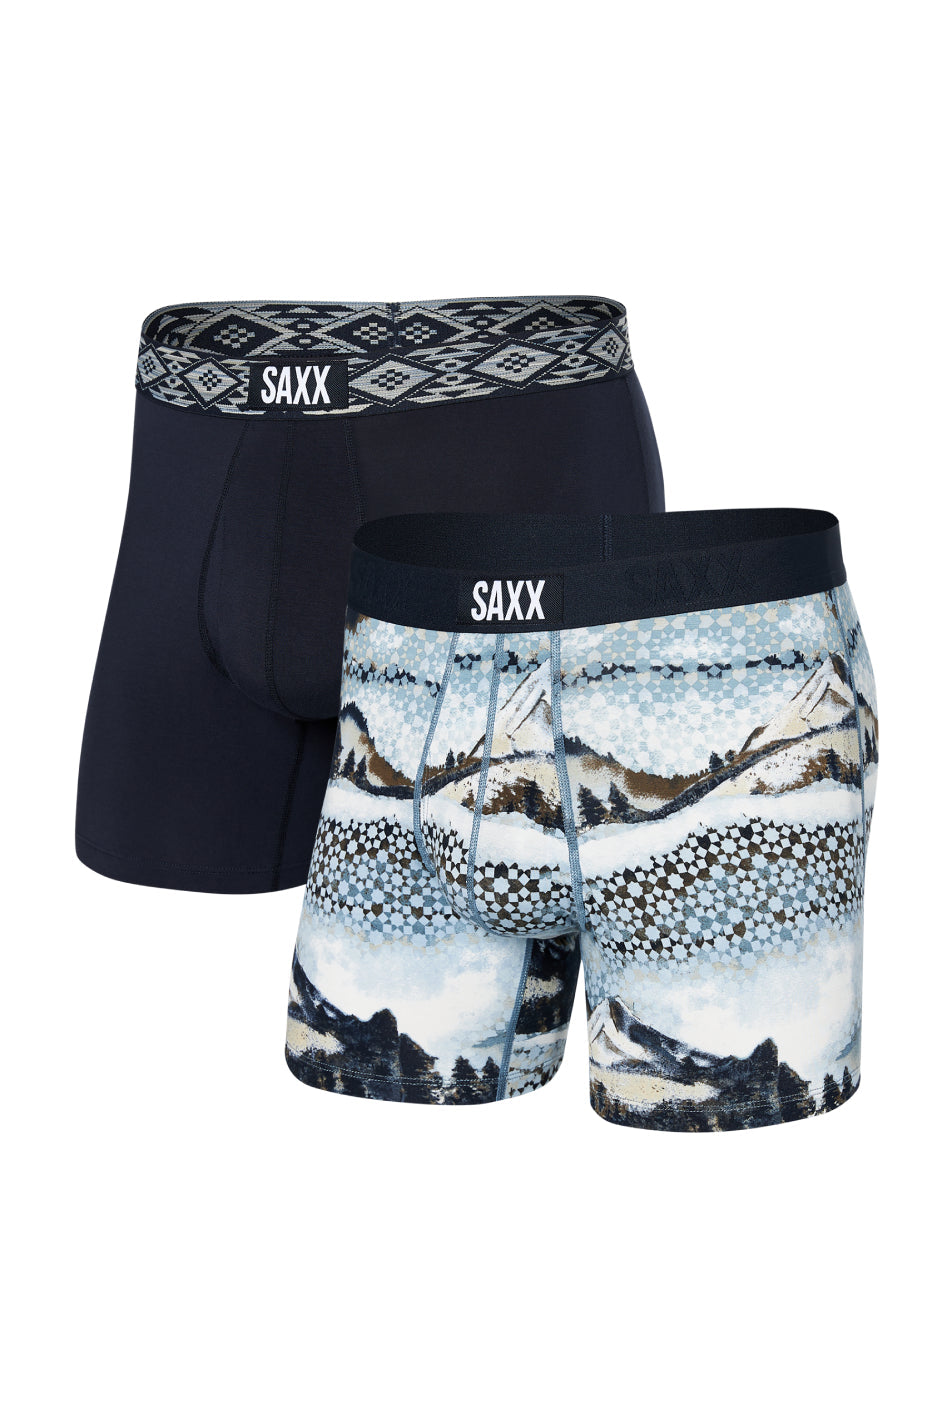 SAXX 2 Pack Men's Ultra Soft Boxer Brief